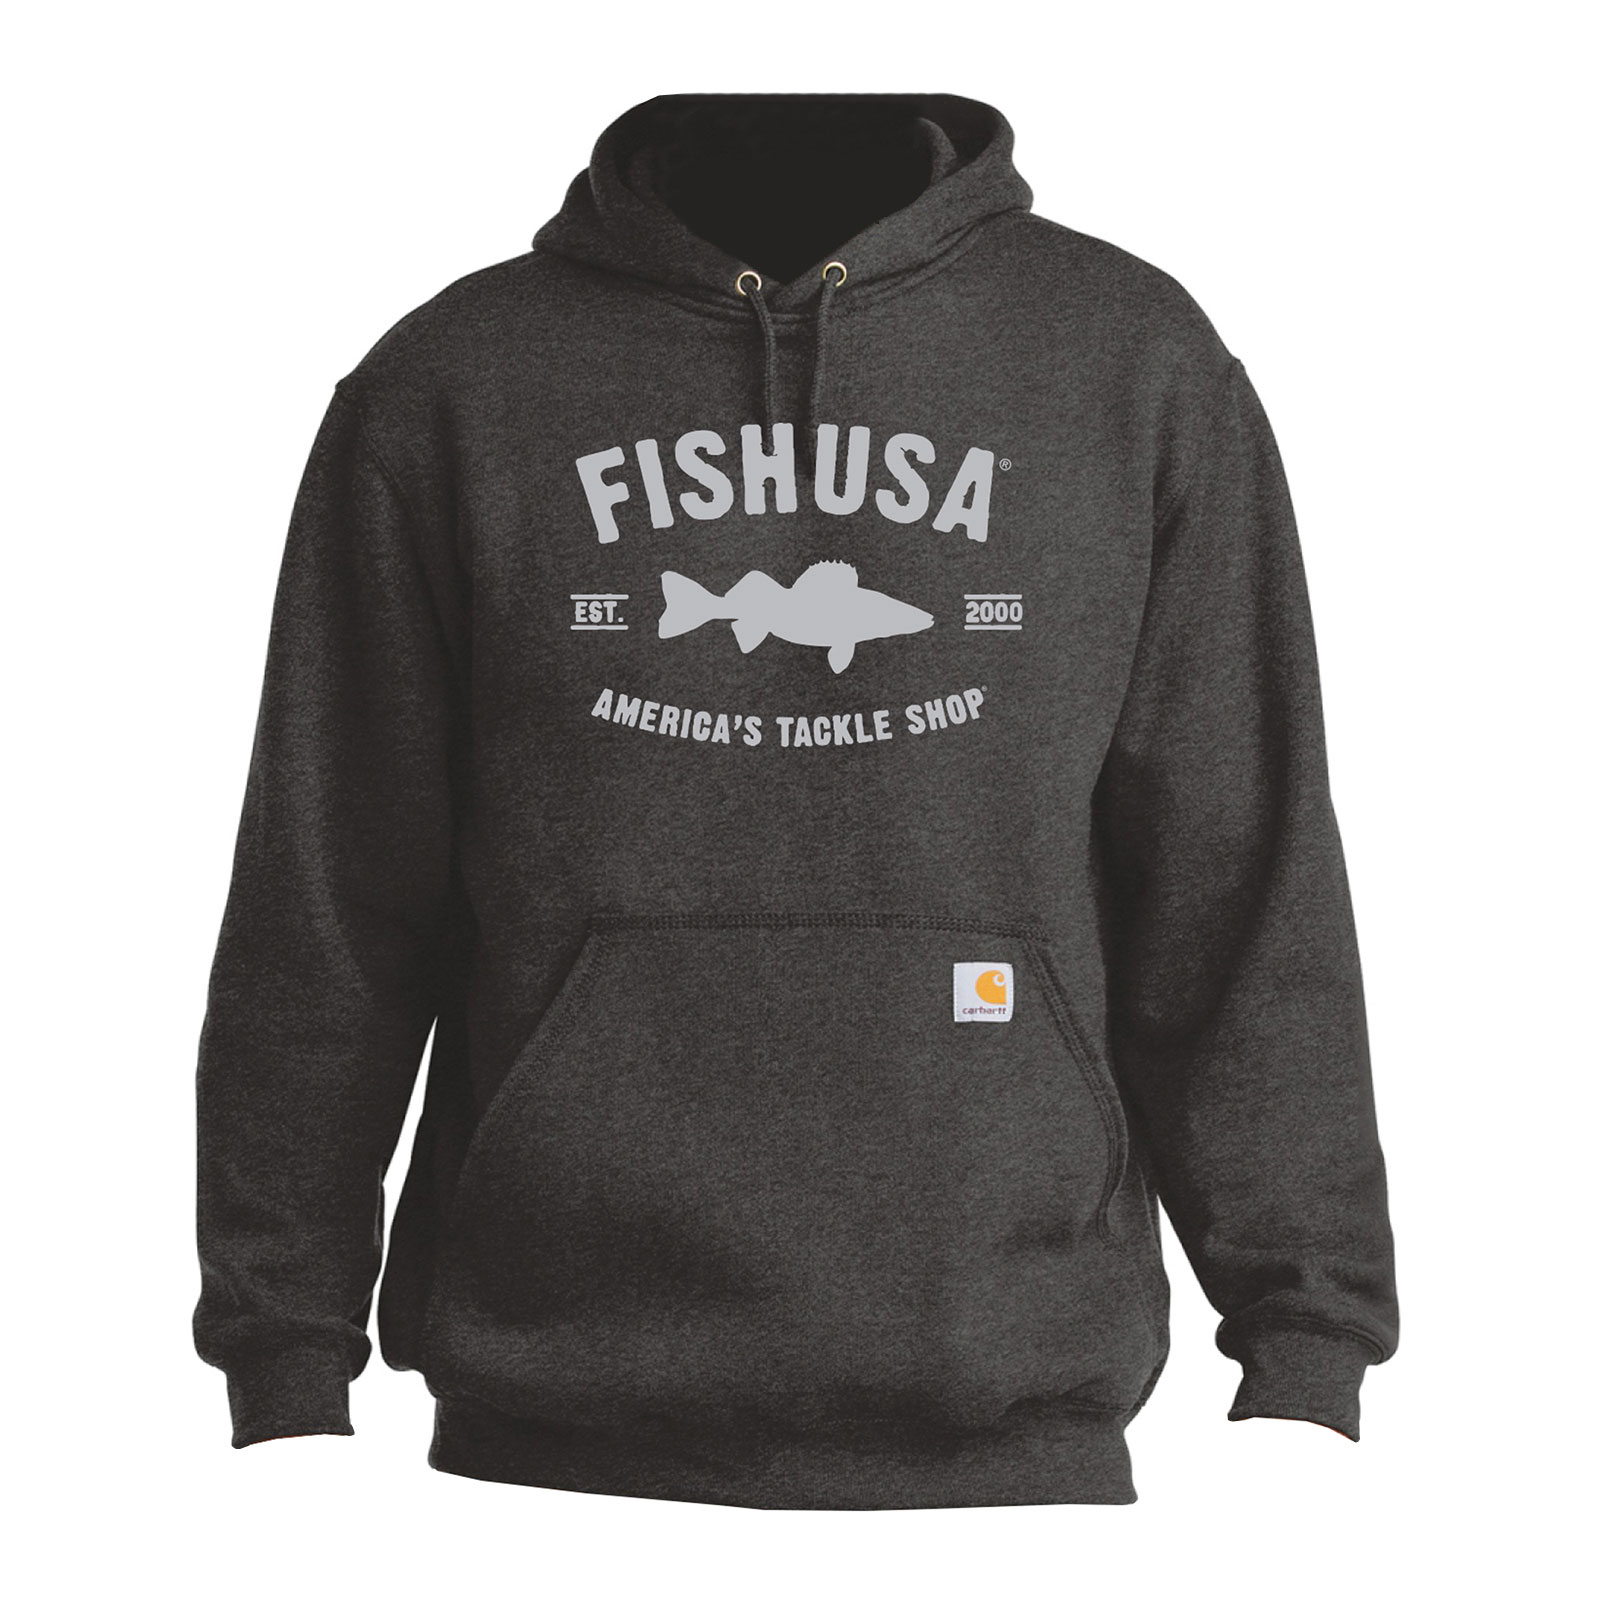 Walleye Fishing Gear: How To Get the Best Walleye Setup - FishUSA